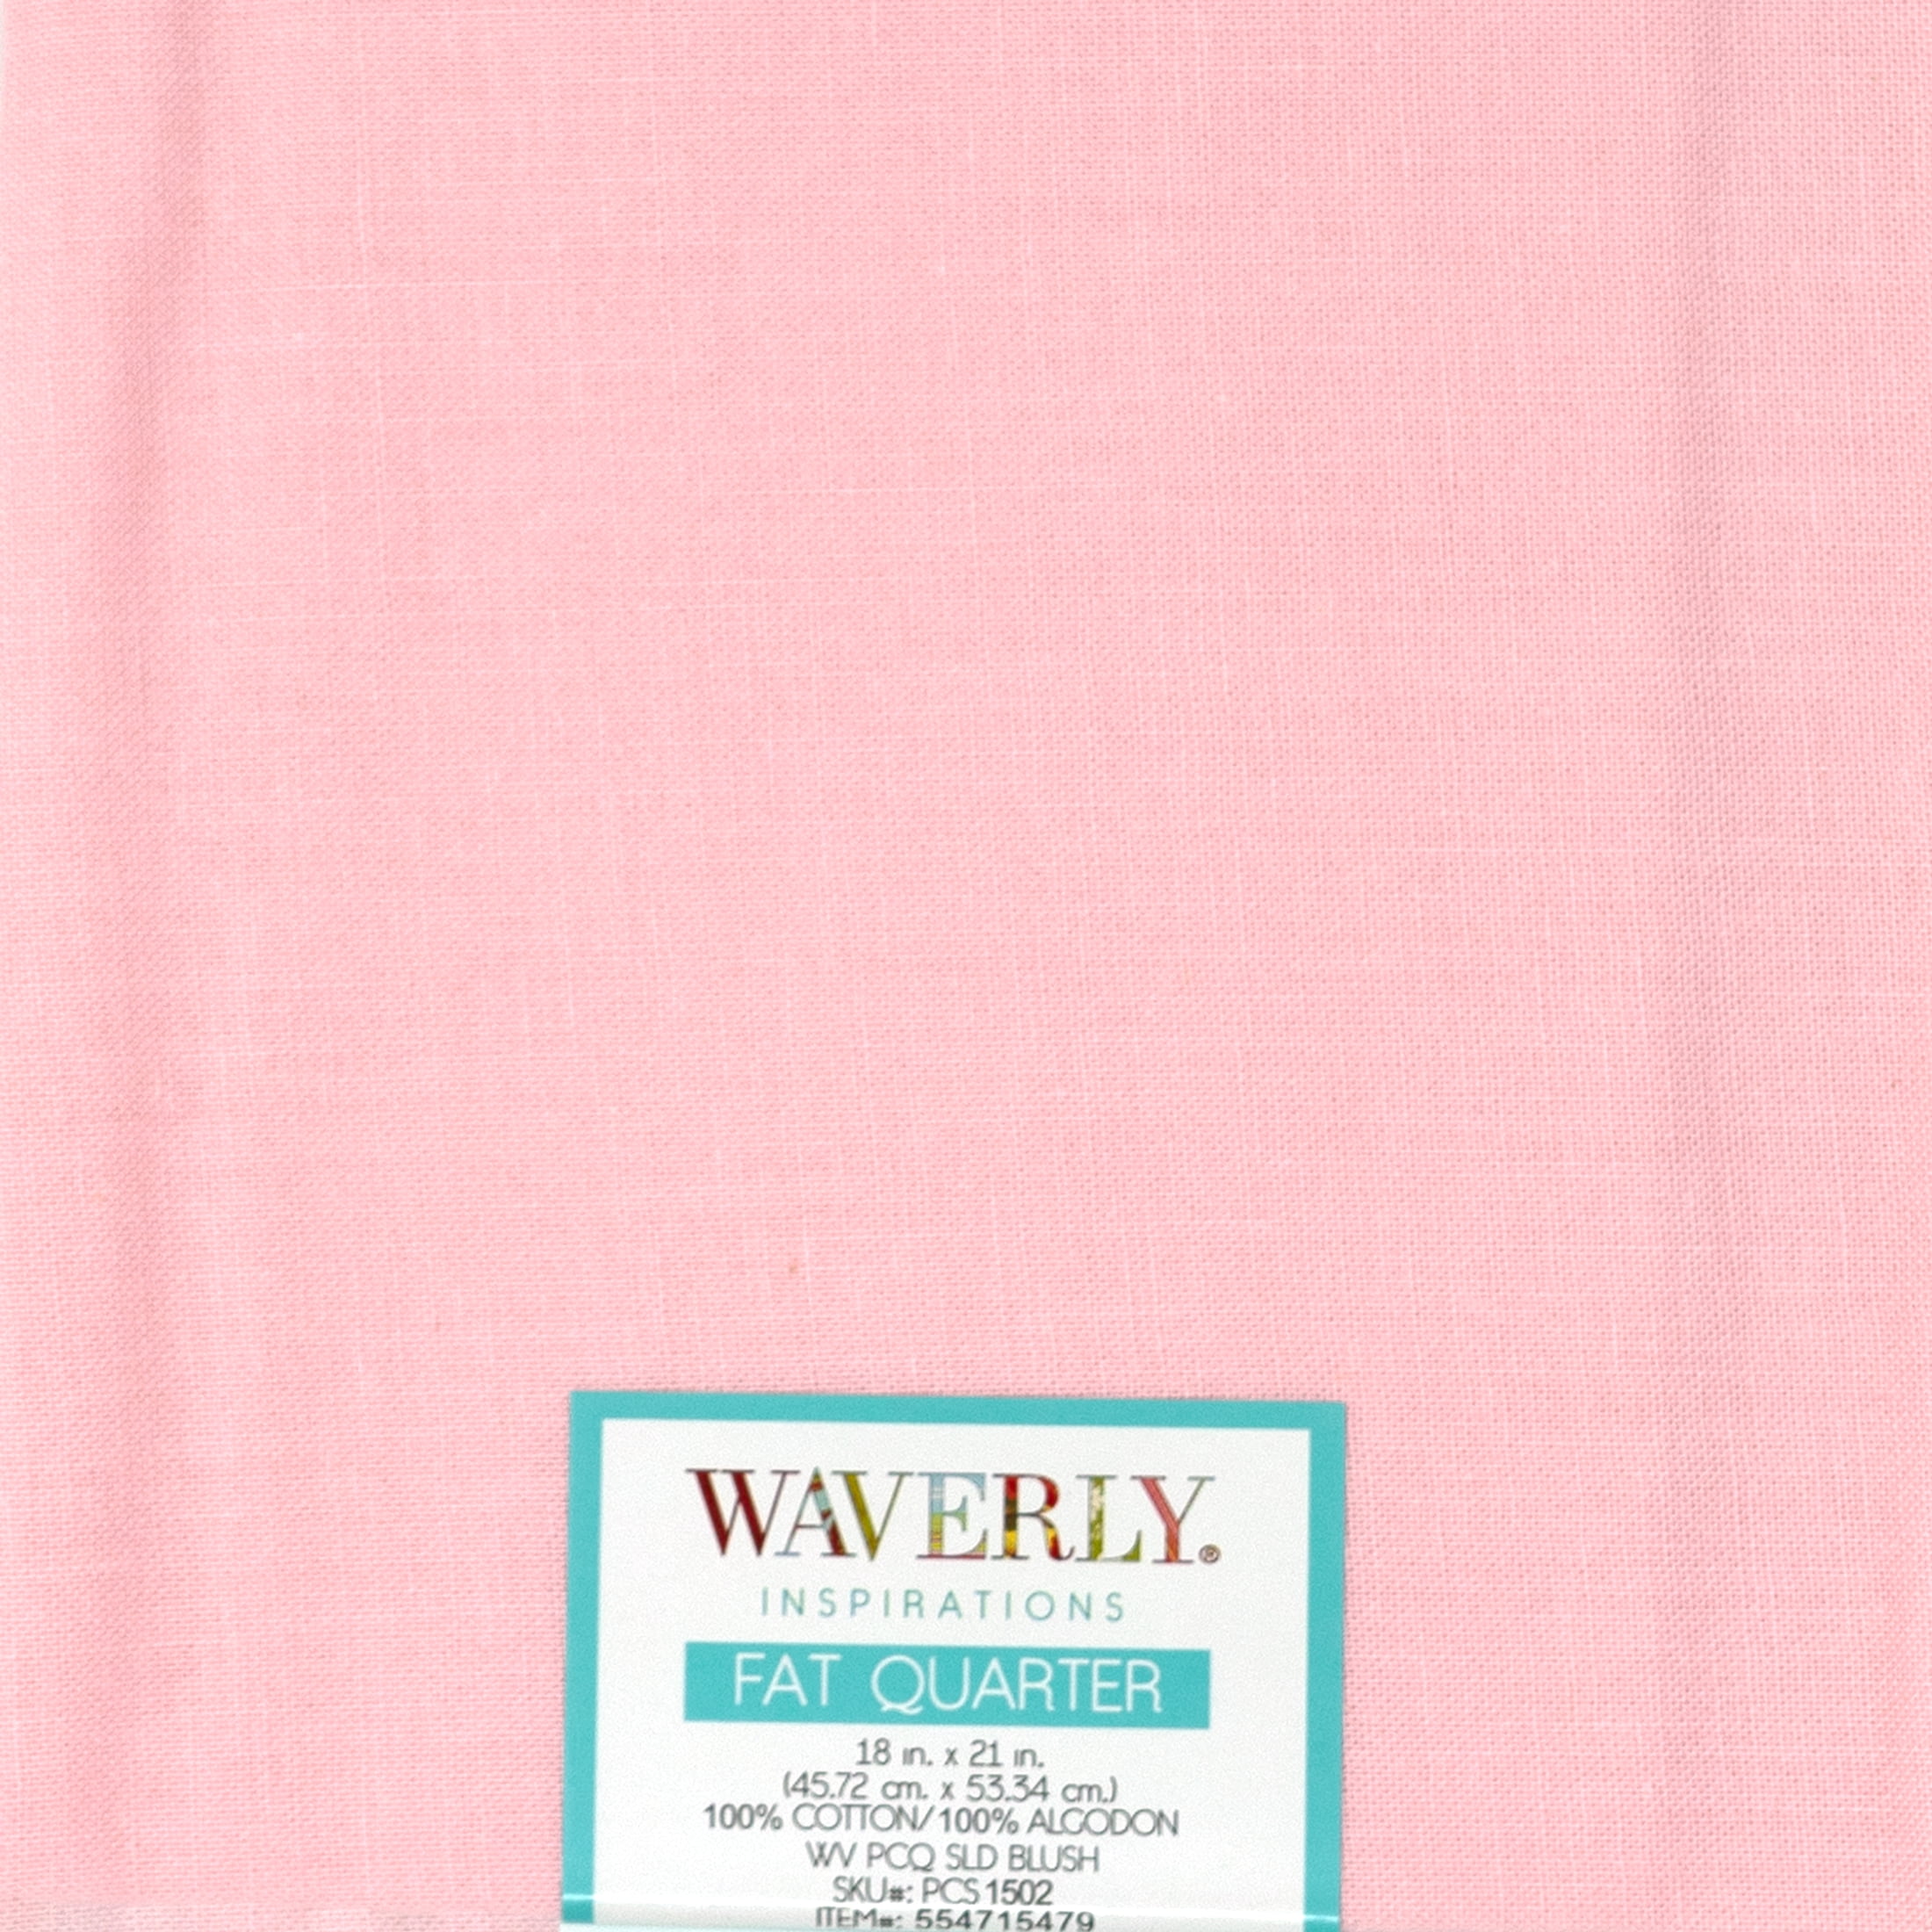 Waverly Inspirations 100% Cotton 18 inch x 21 inch Fat Quarter Poppy Fabric Bundles, 5 Pieces